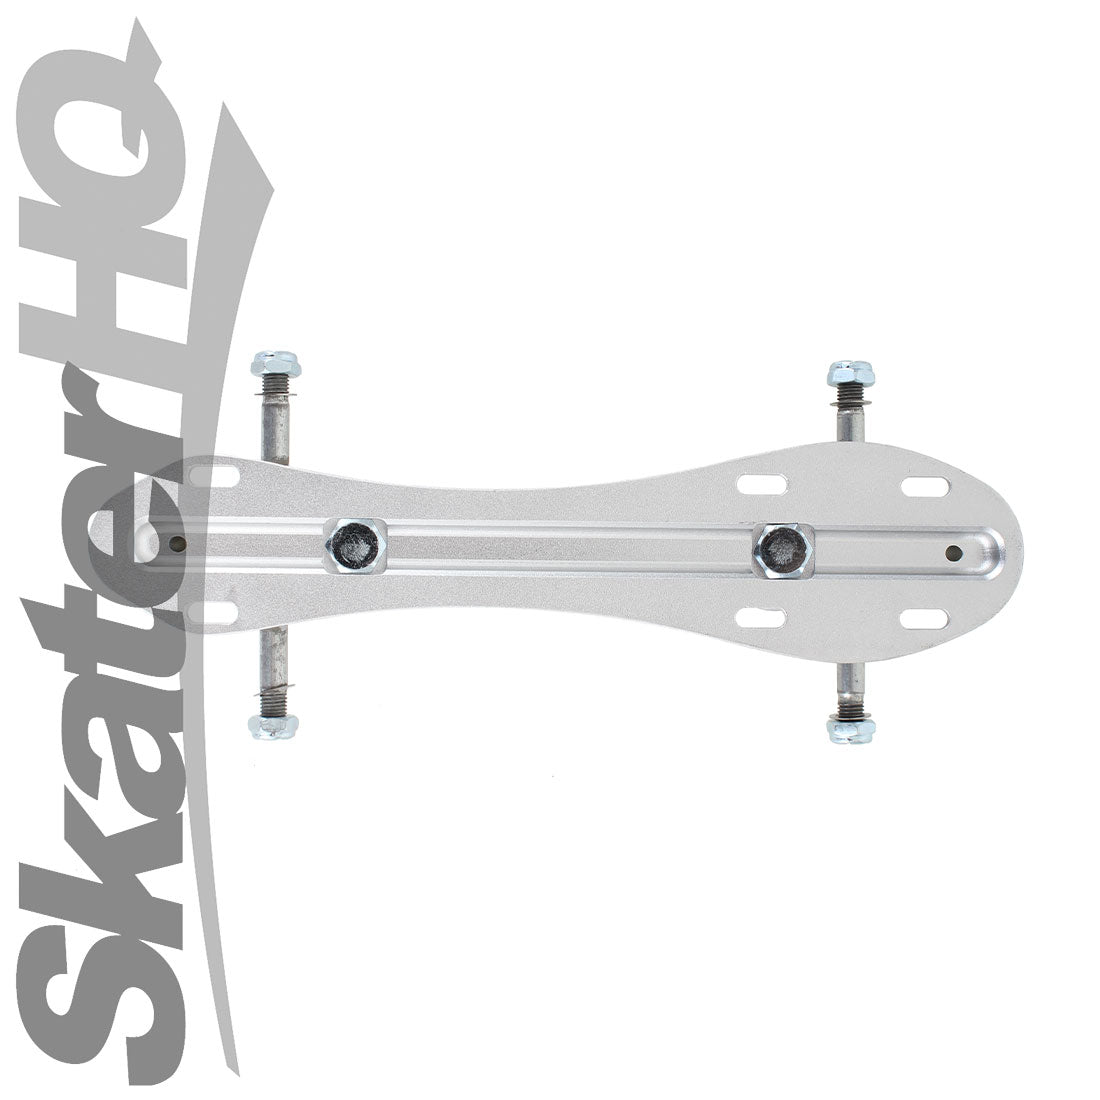 BONT Tracer Speed Plates 5.5 - Silver Roller Skate Plates